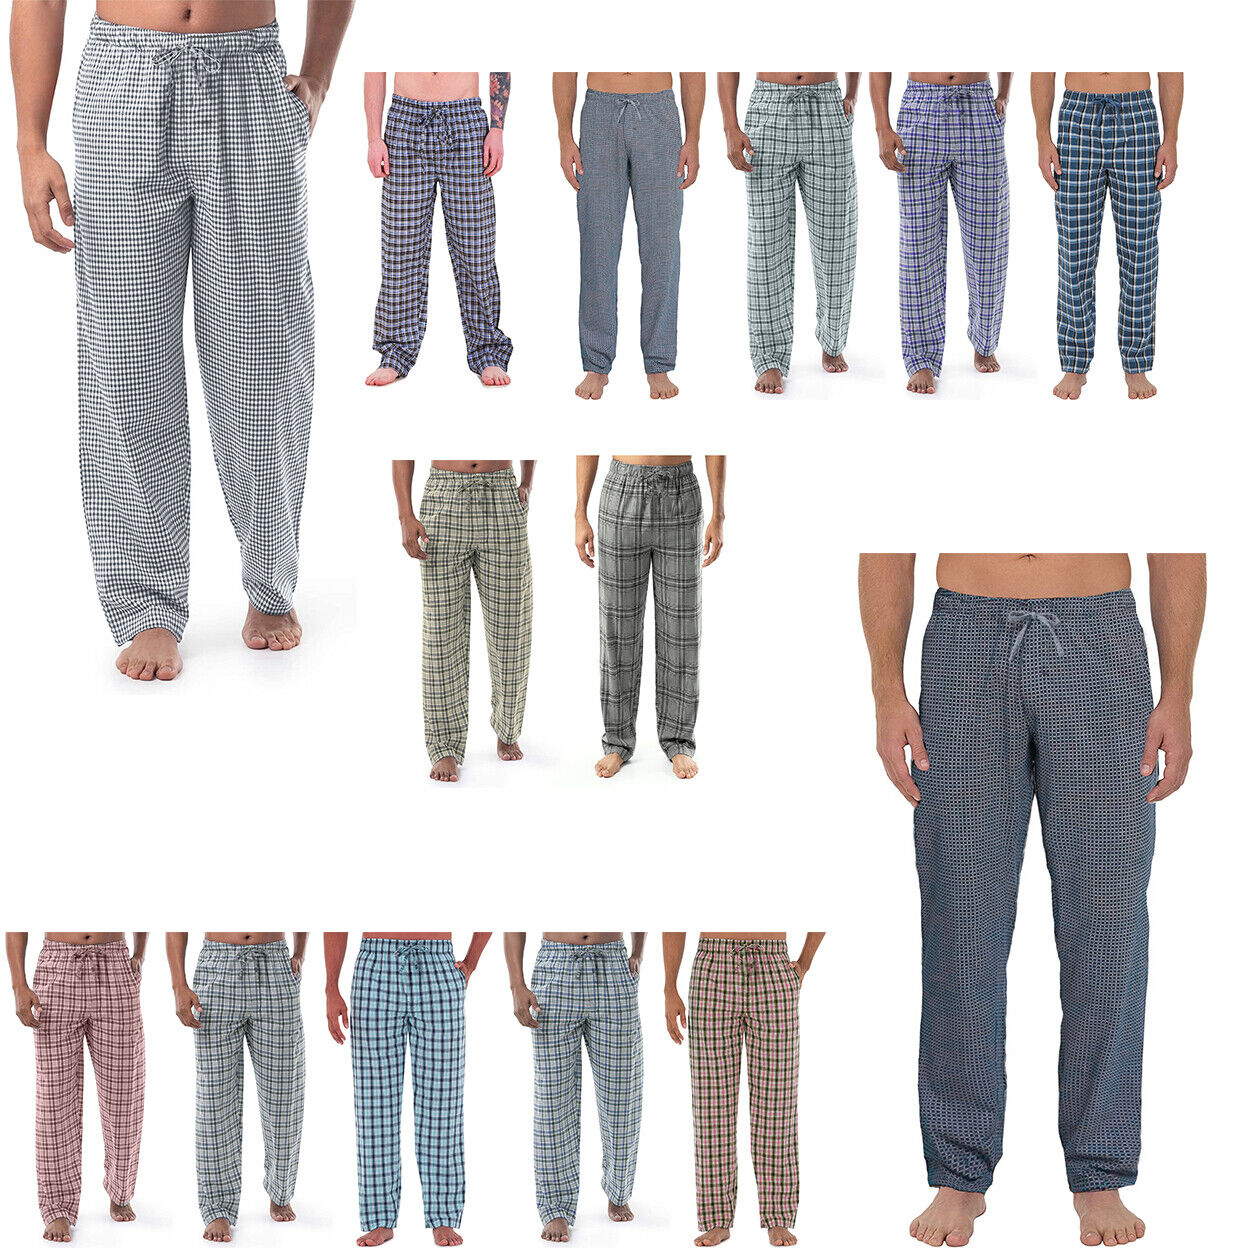 Men's Ultra-Soft Solid & Plaid Cotton Jersey Knit Comfy Sleep Lounge Pajama Pants - Solid, Medium